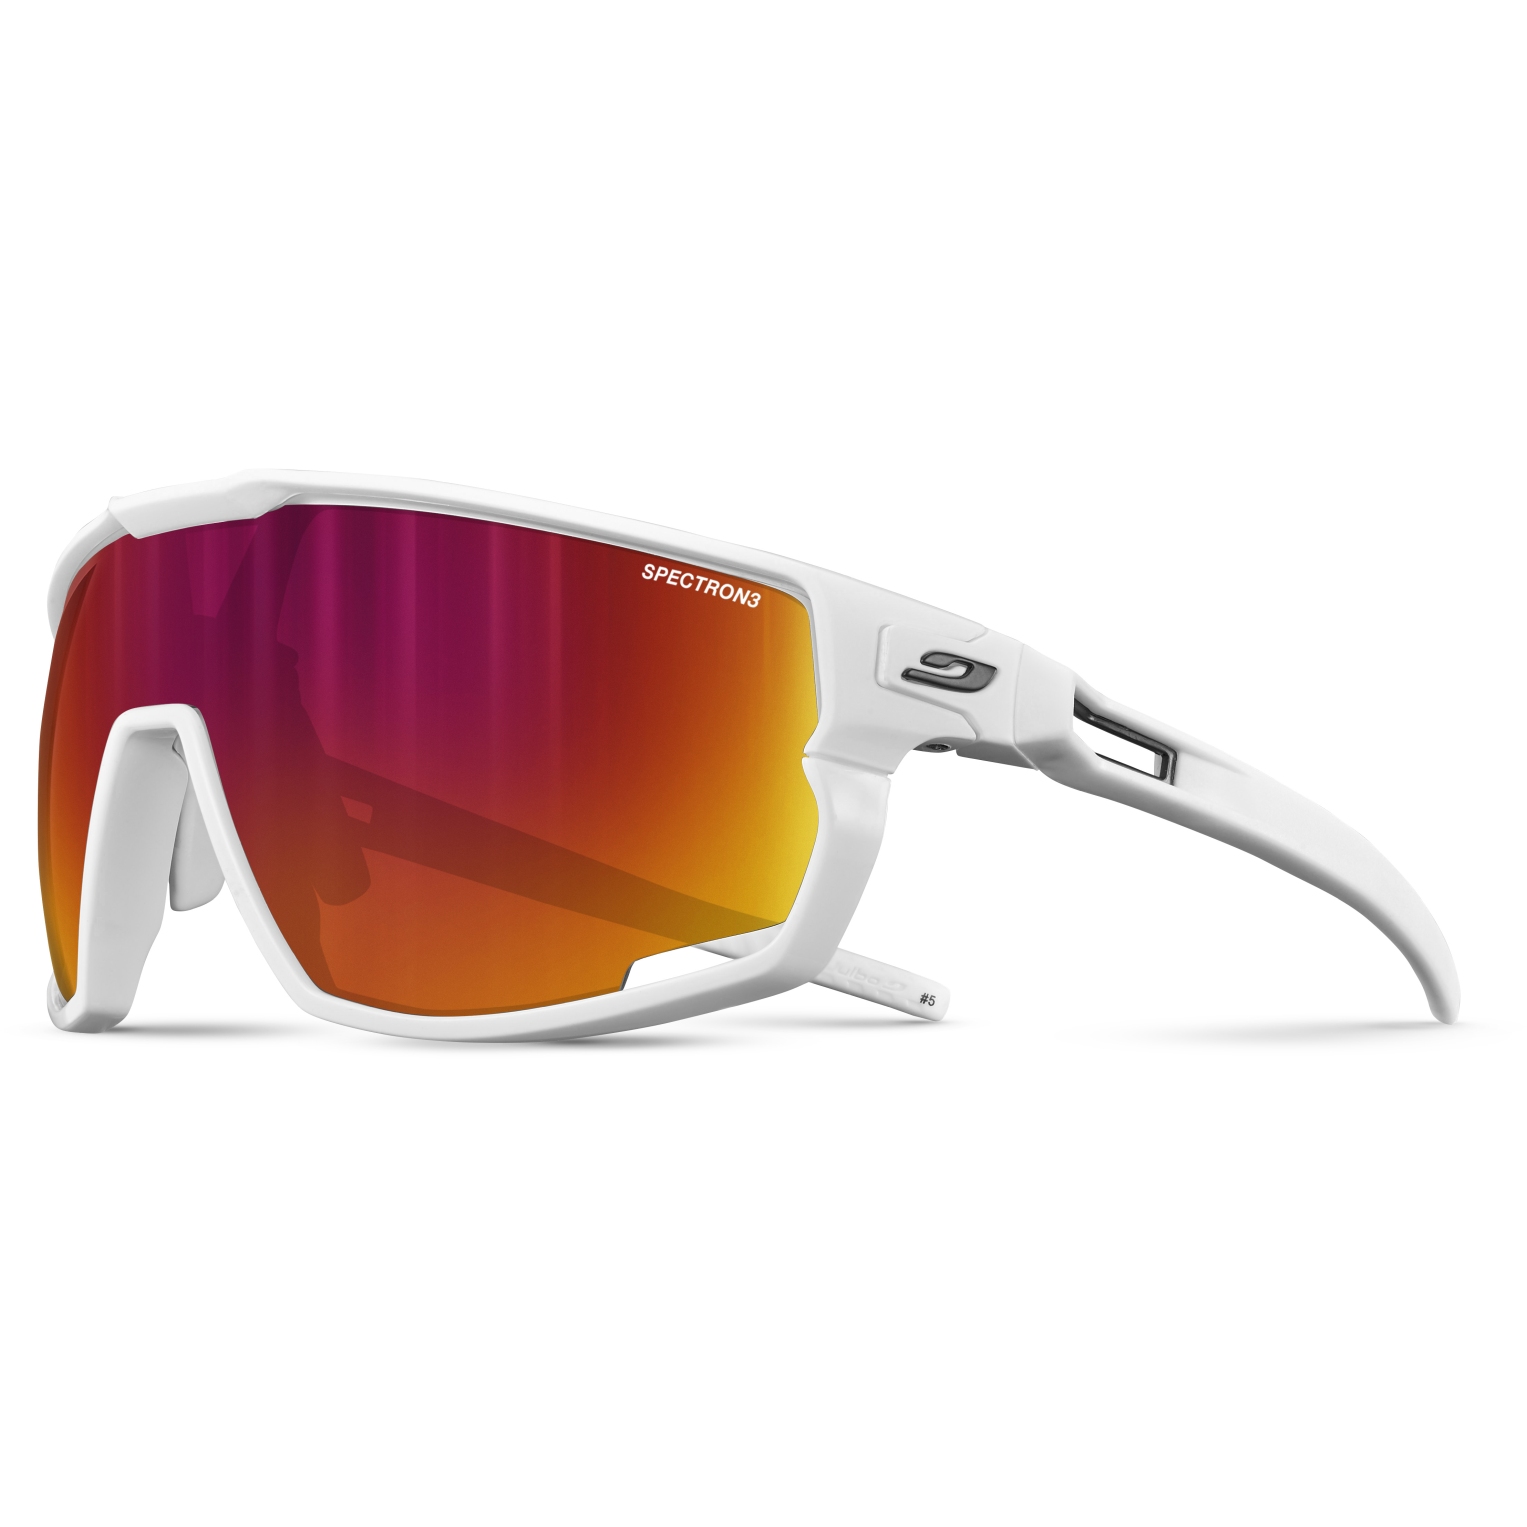 Productfoto van Julbo Rush Spectron 3CF Sunglasses - White / Black